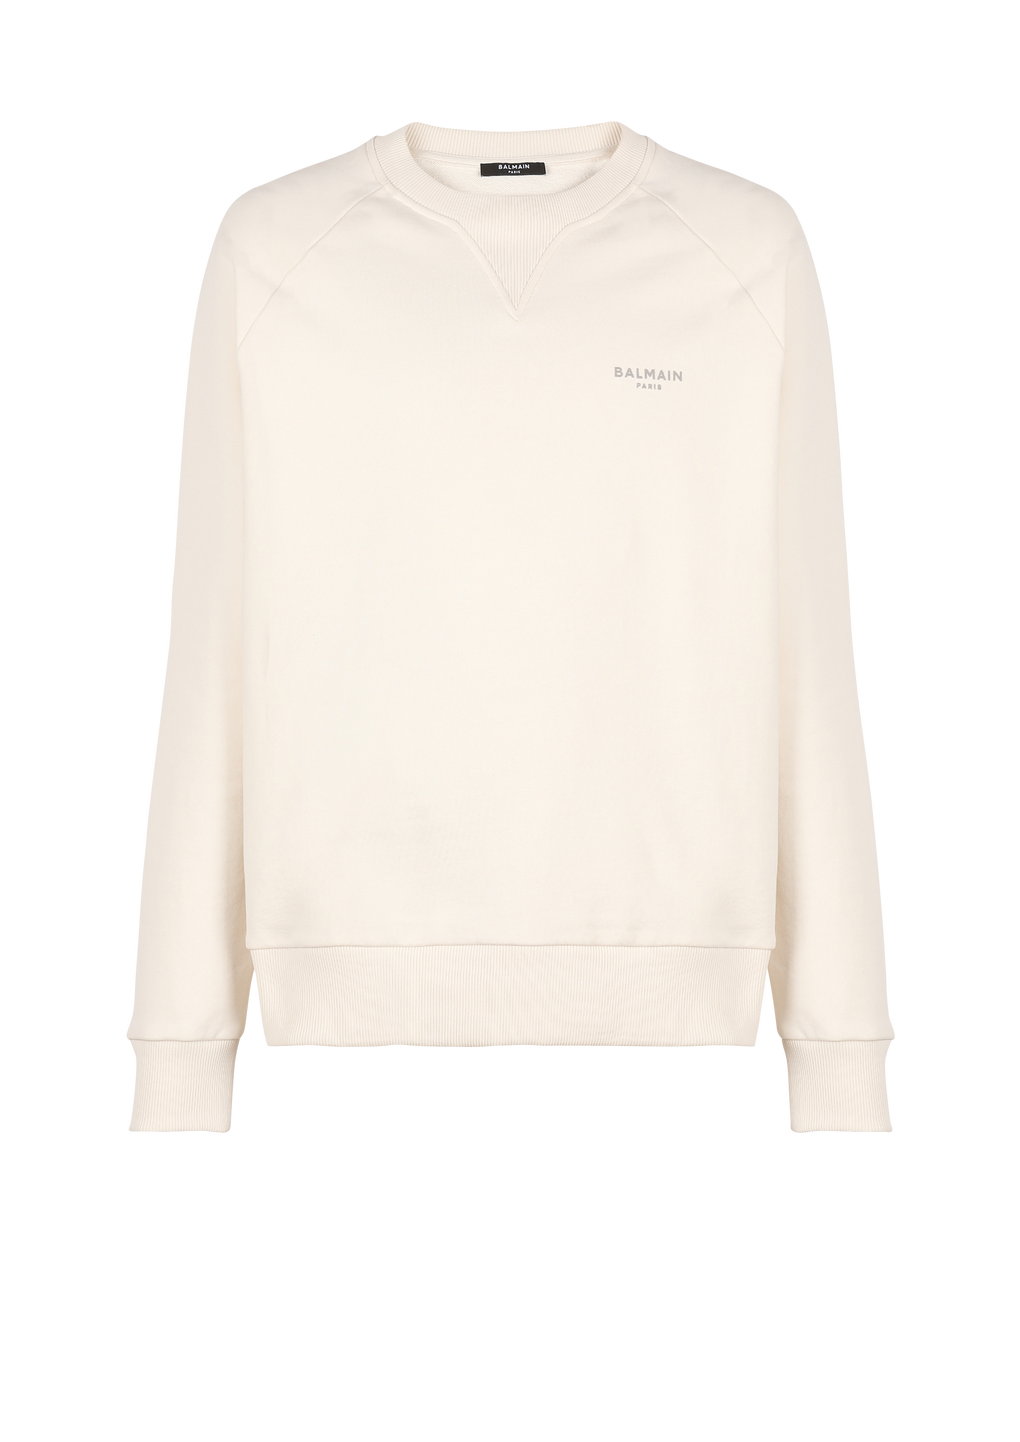 Cotton printed Balmain logo sweatshirt, beige, hi-res